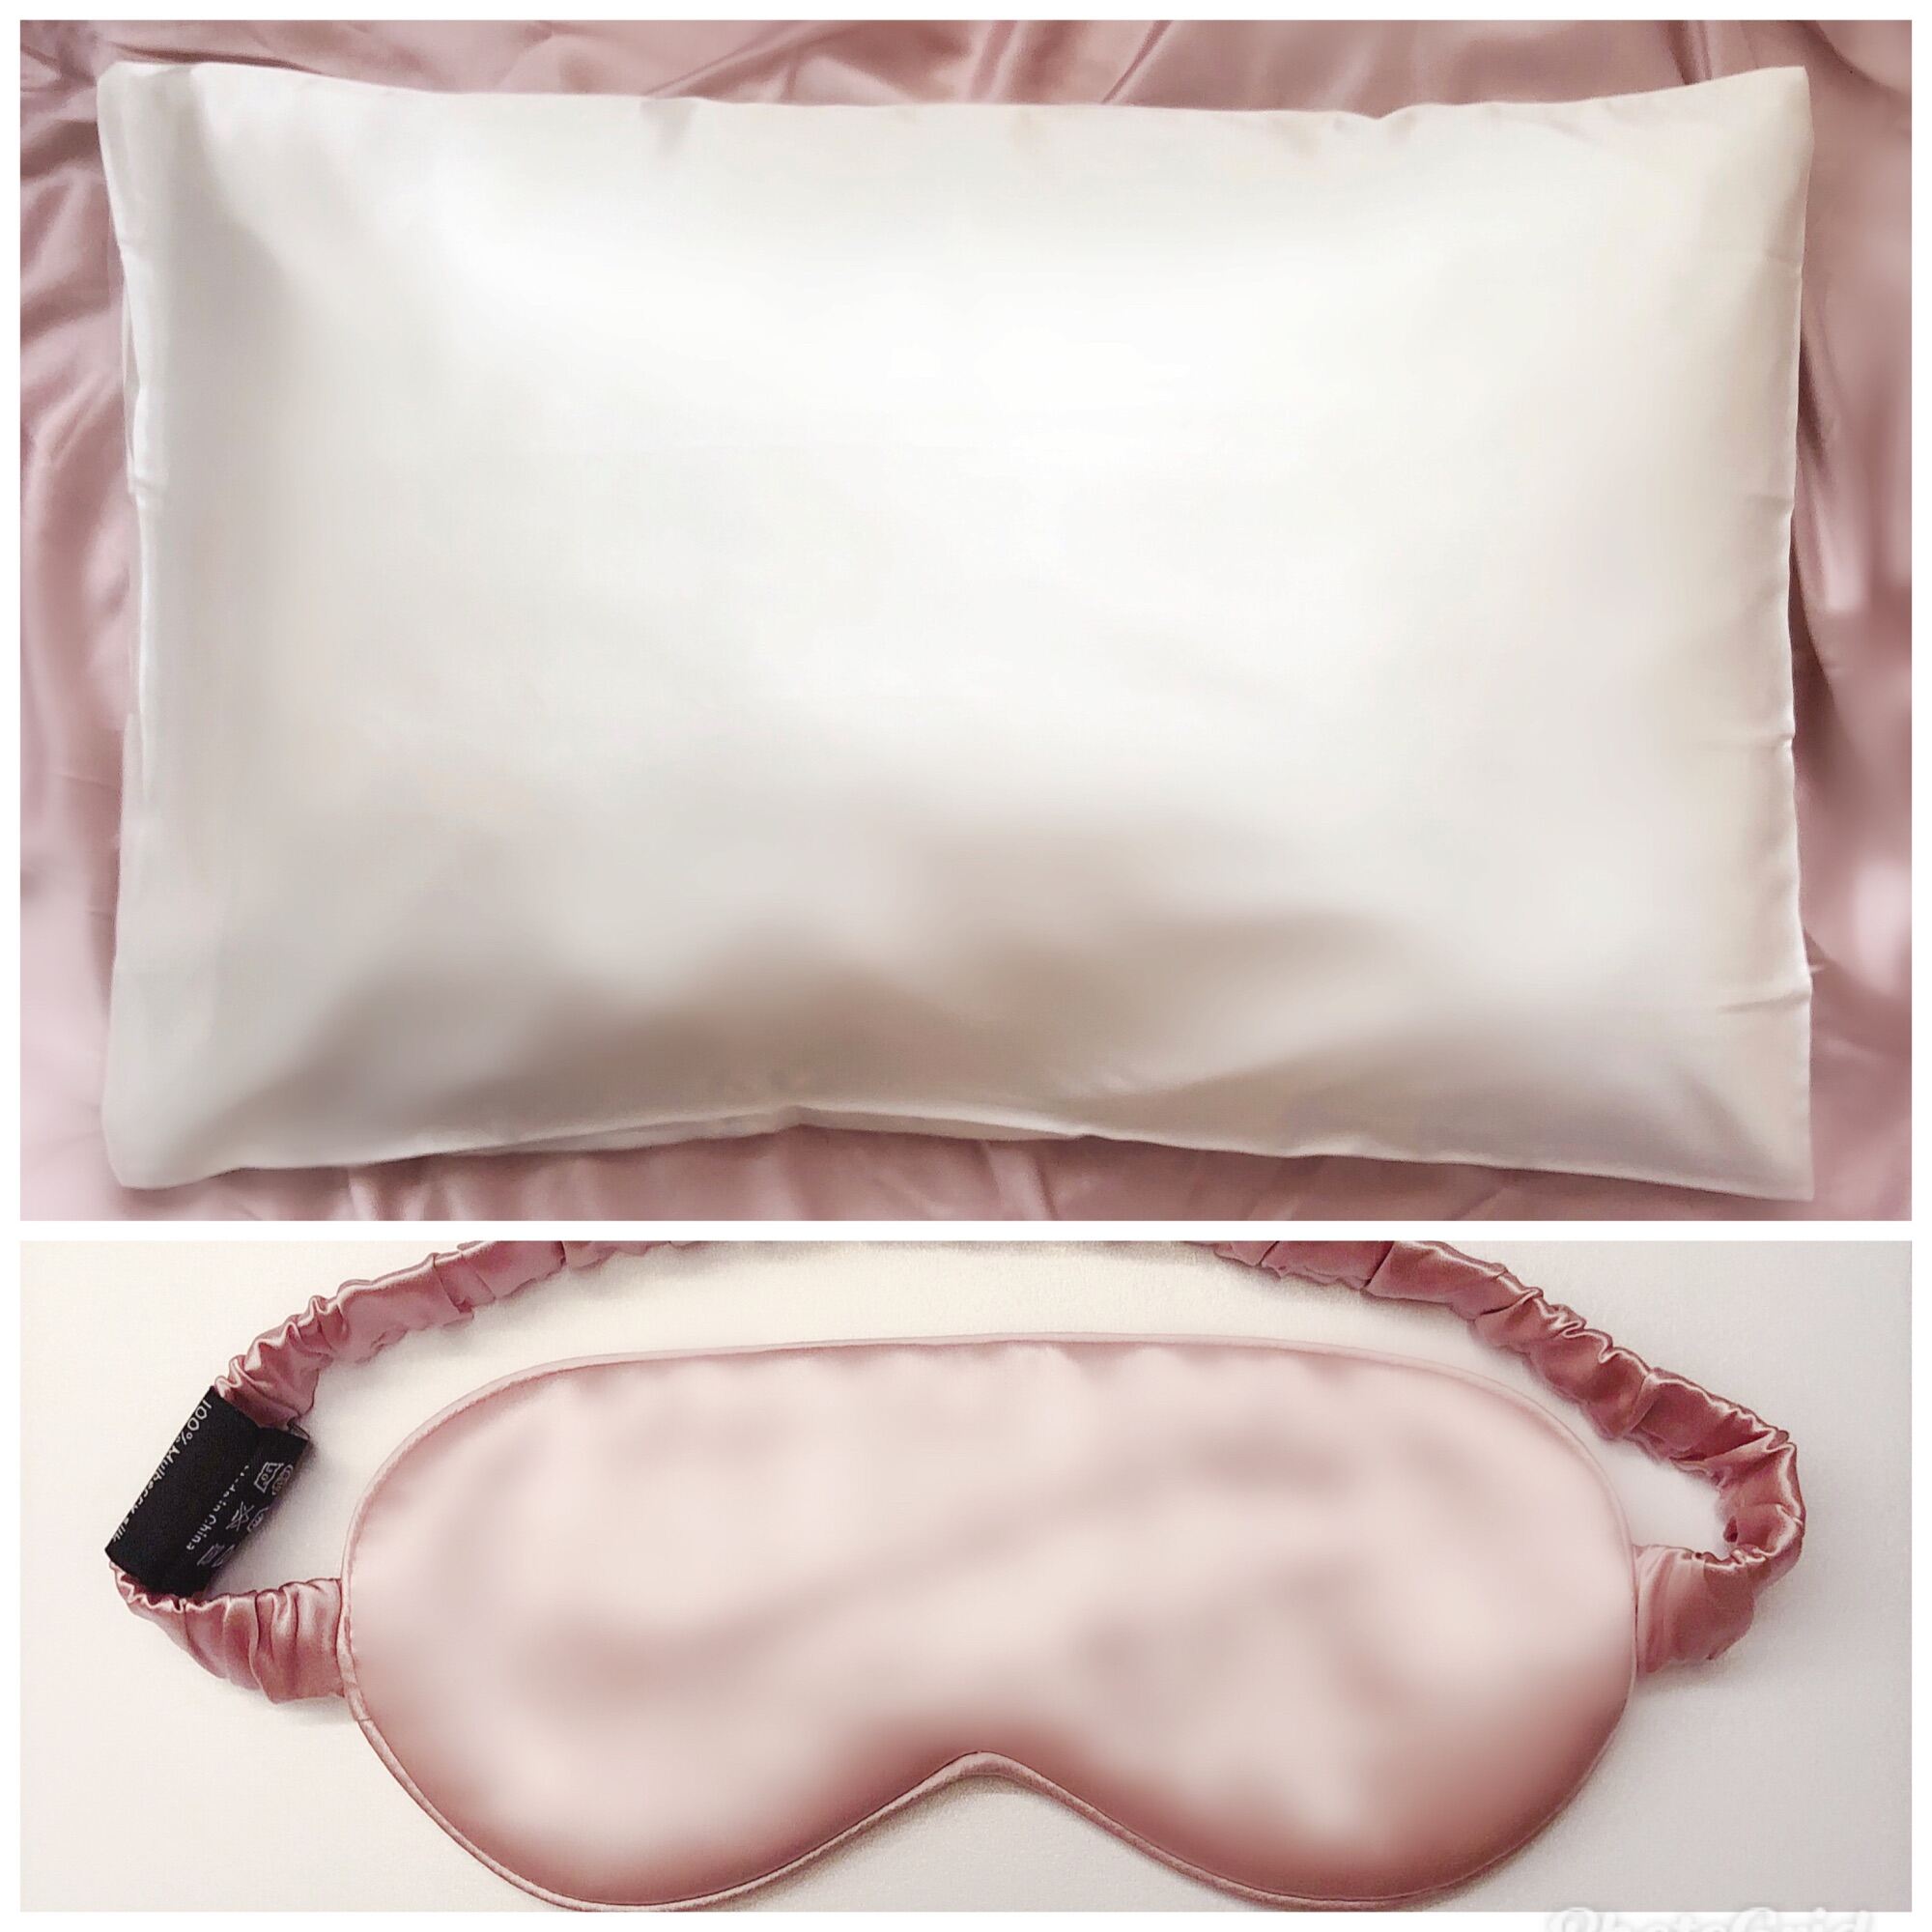 For Her Luxury Silk Gift Set (Pillowcase and Eyemask set